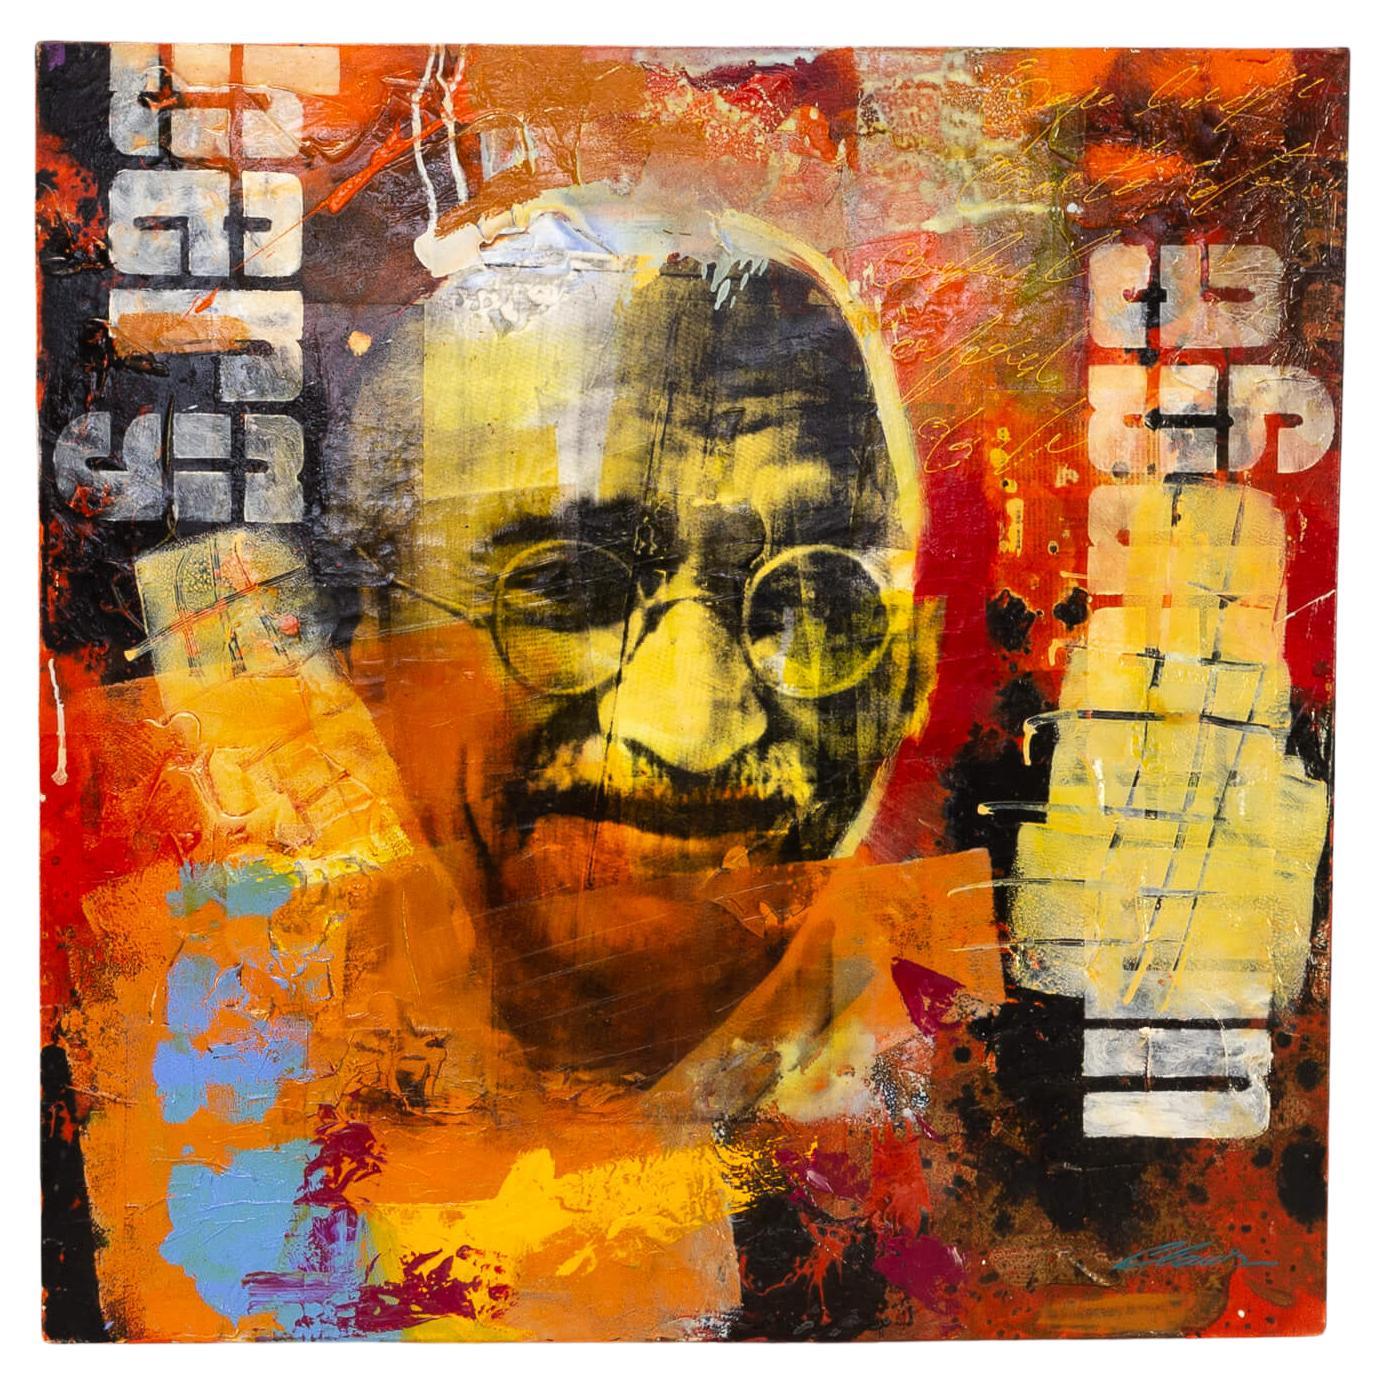 Claus Costa popart ‘Ghandi’ artwork For Sale